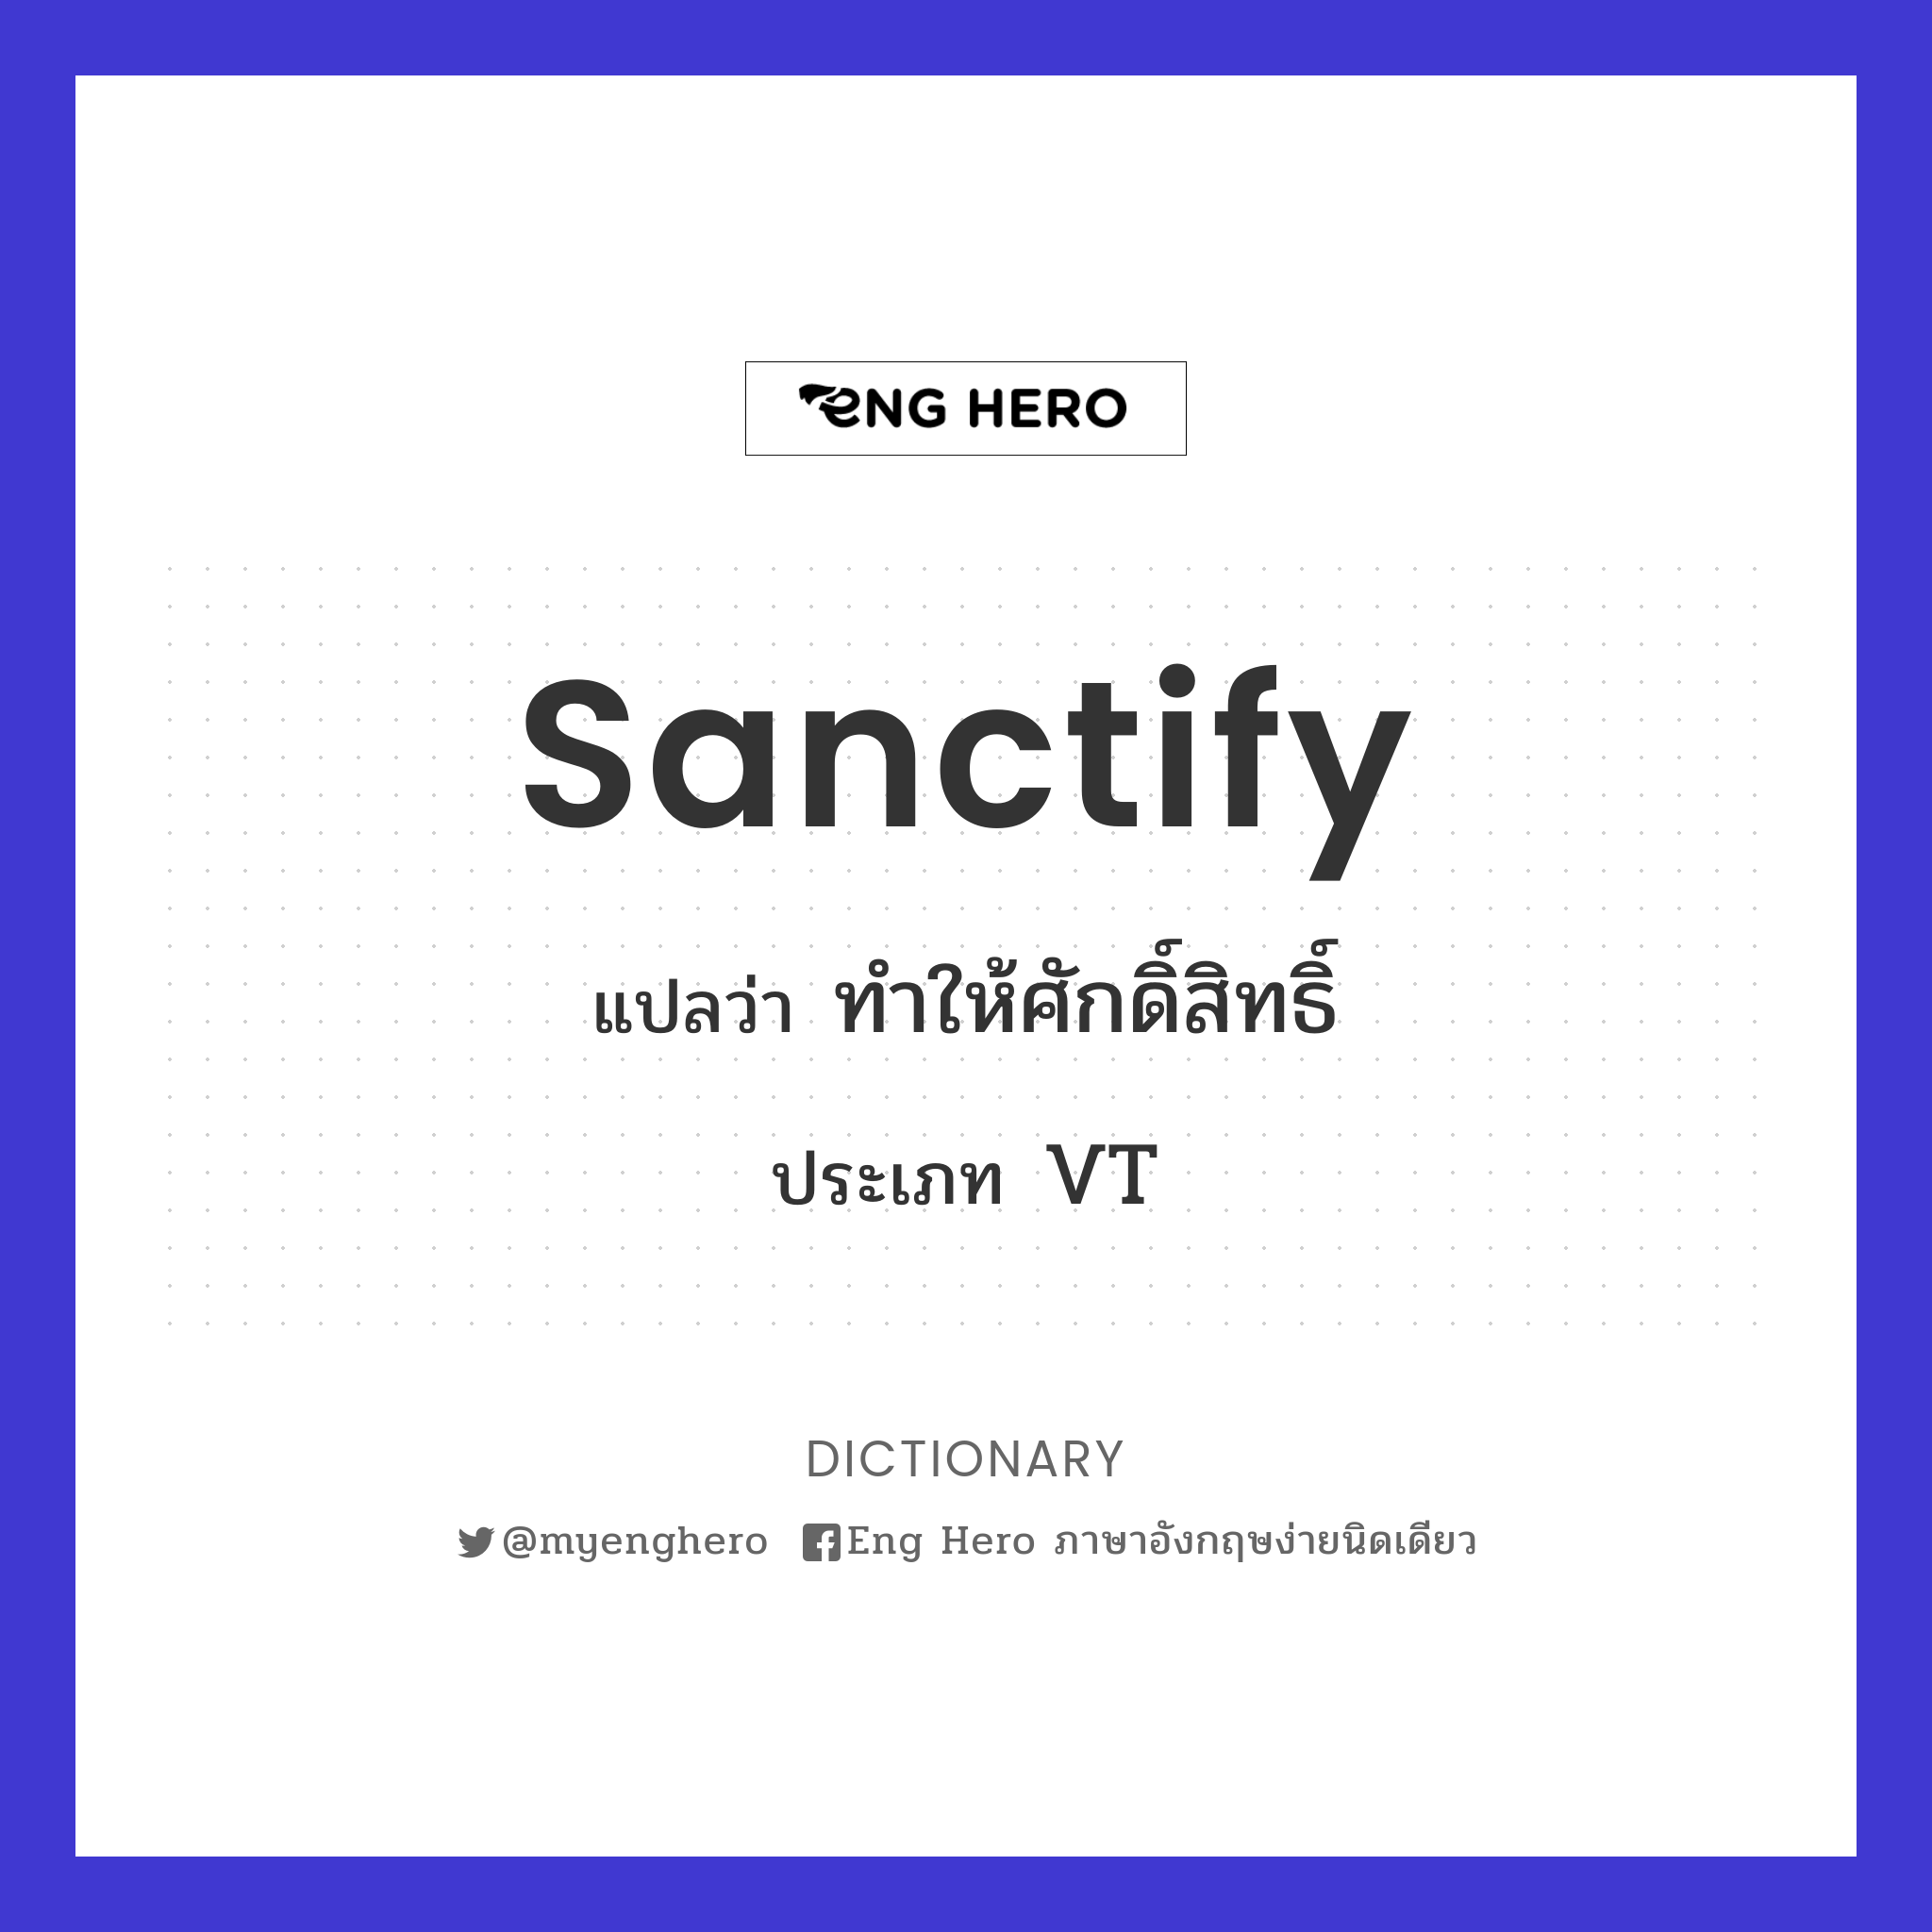 sanctify